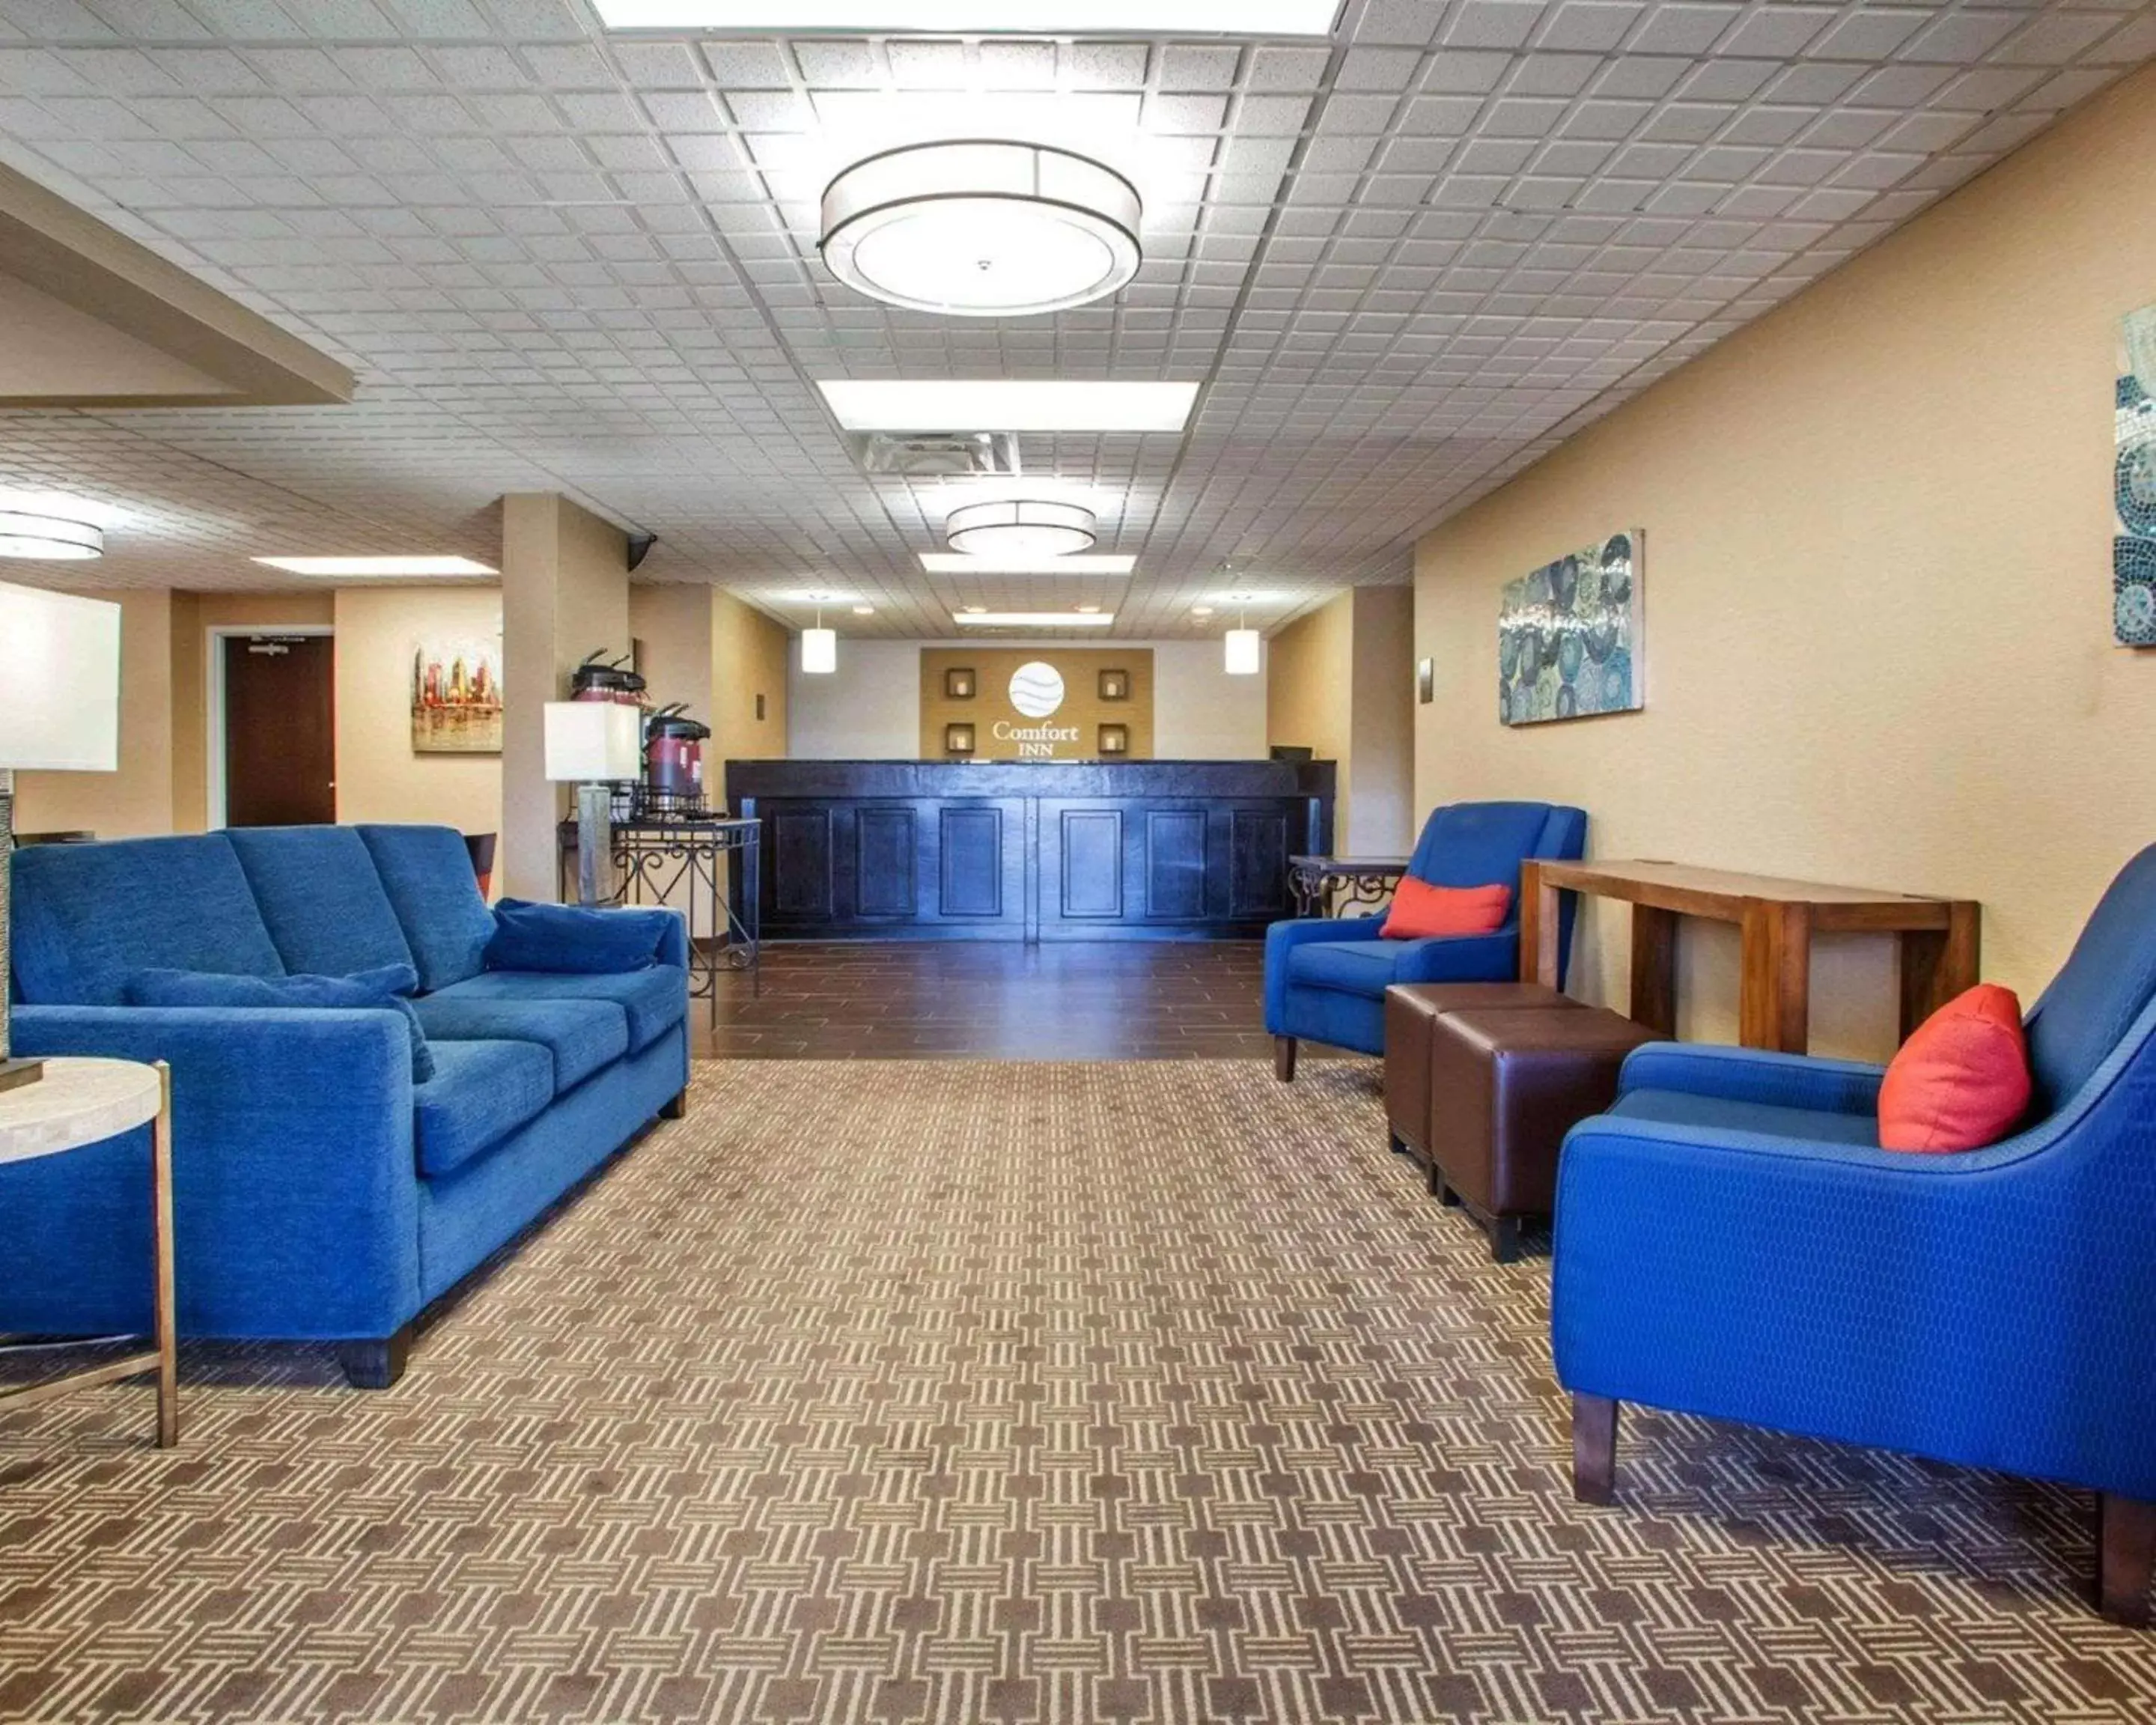 Lobby or reception in Comfort Inn Dayton - Huber Heights